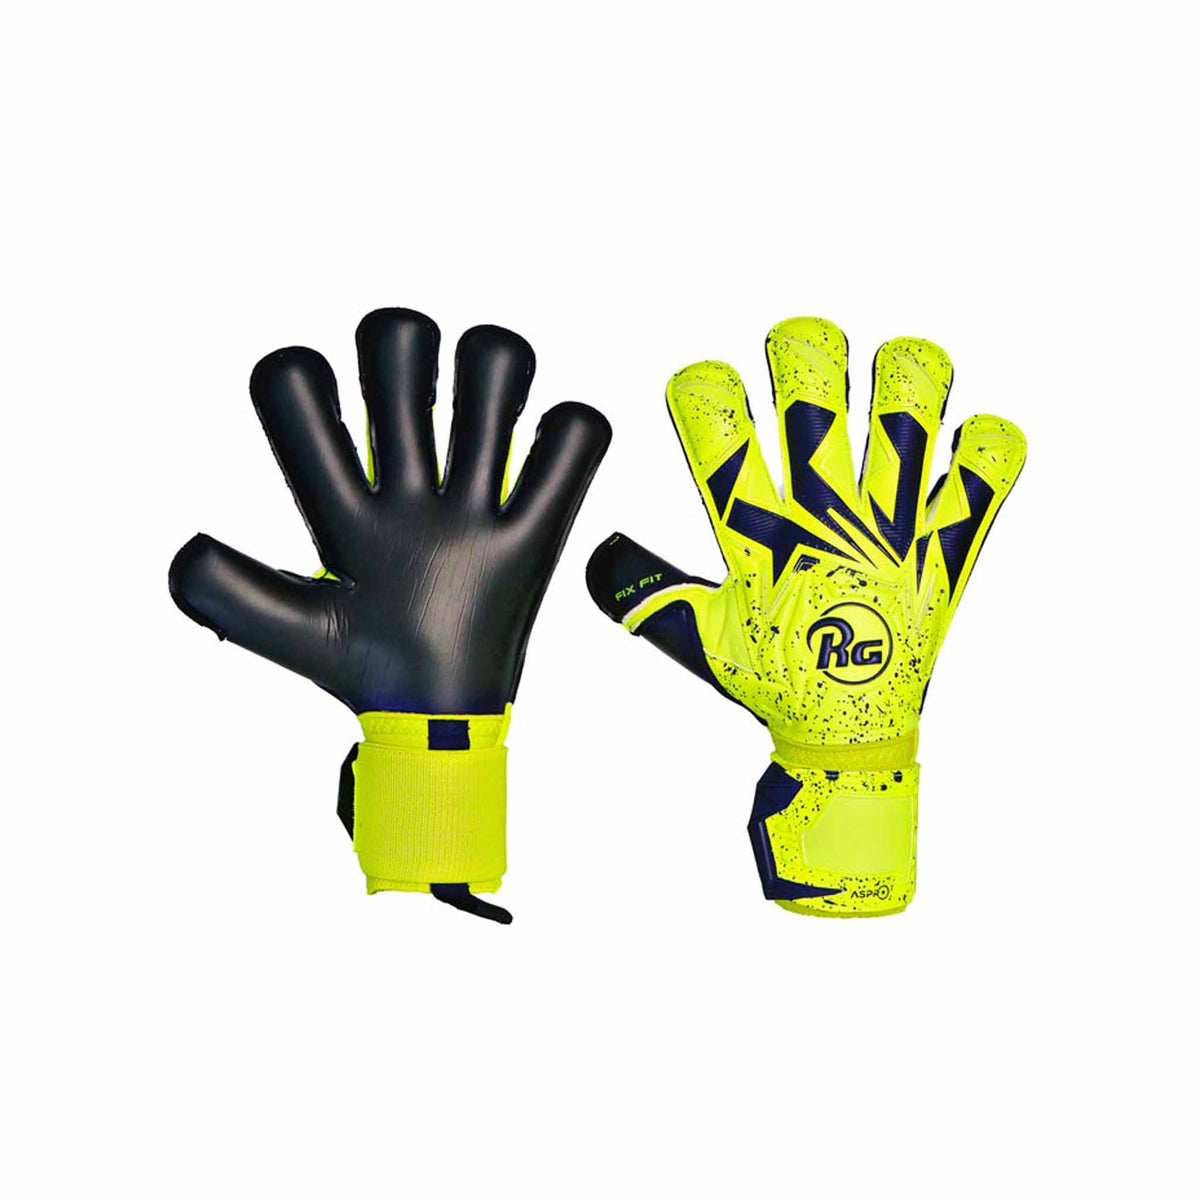 RG Aspro Fluo gants de gardien de but de soccer